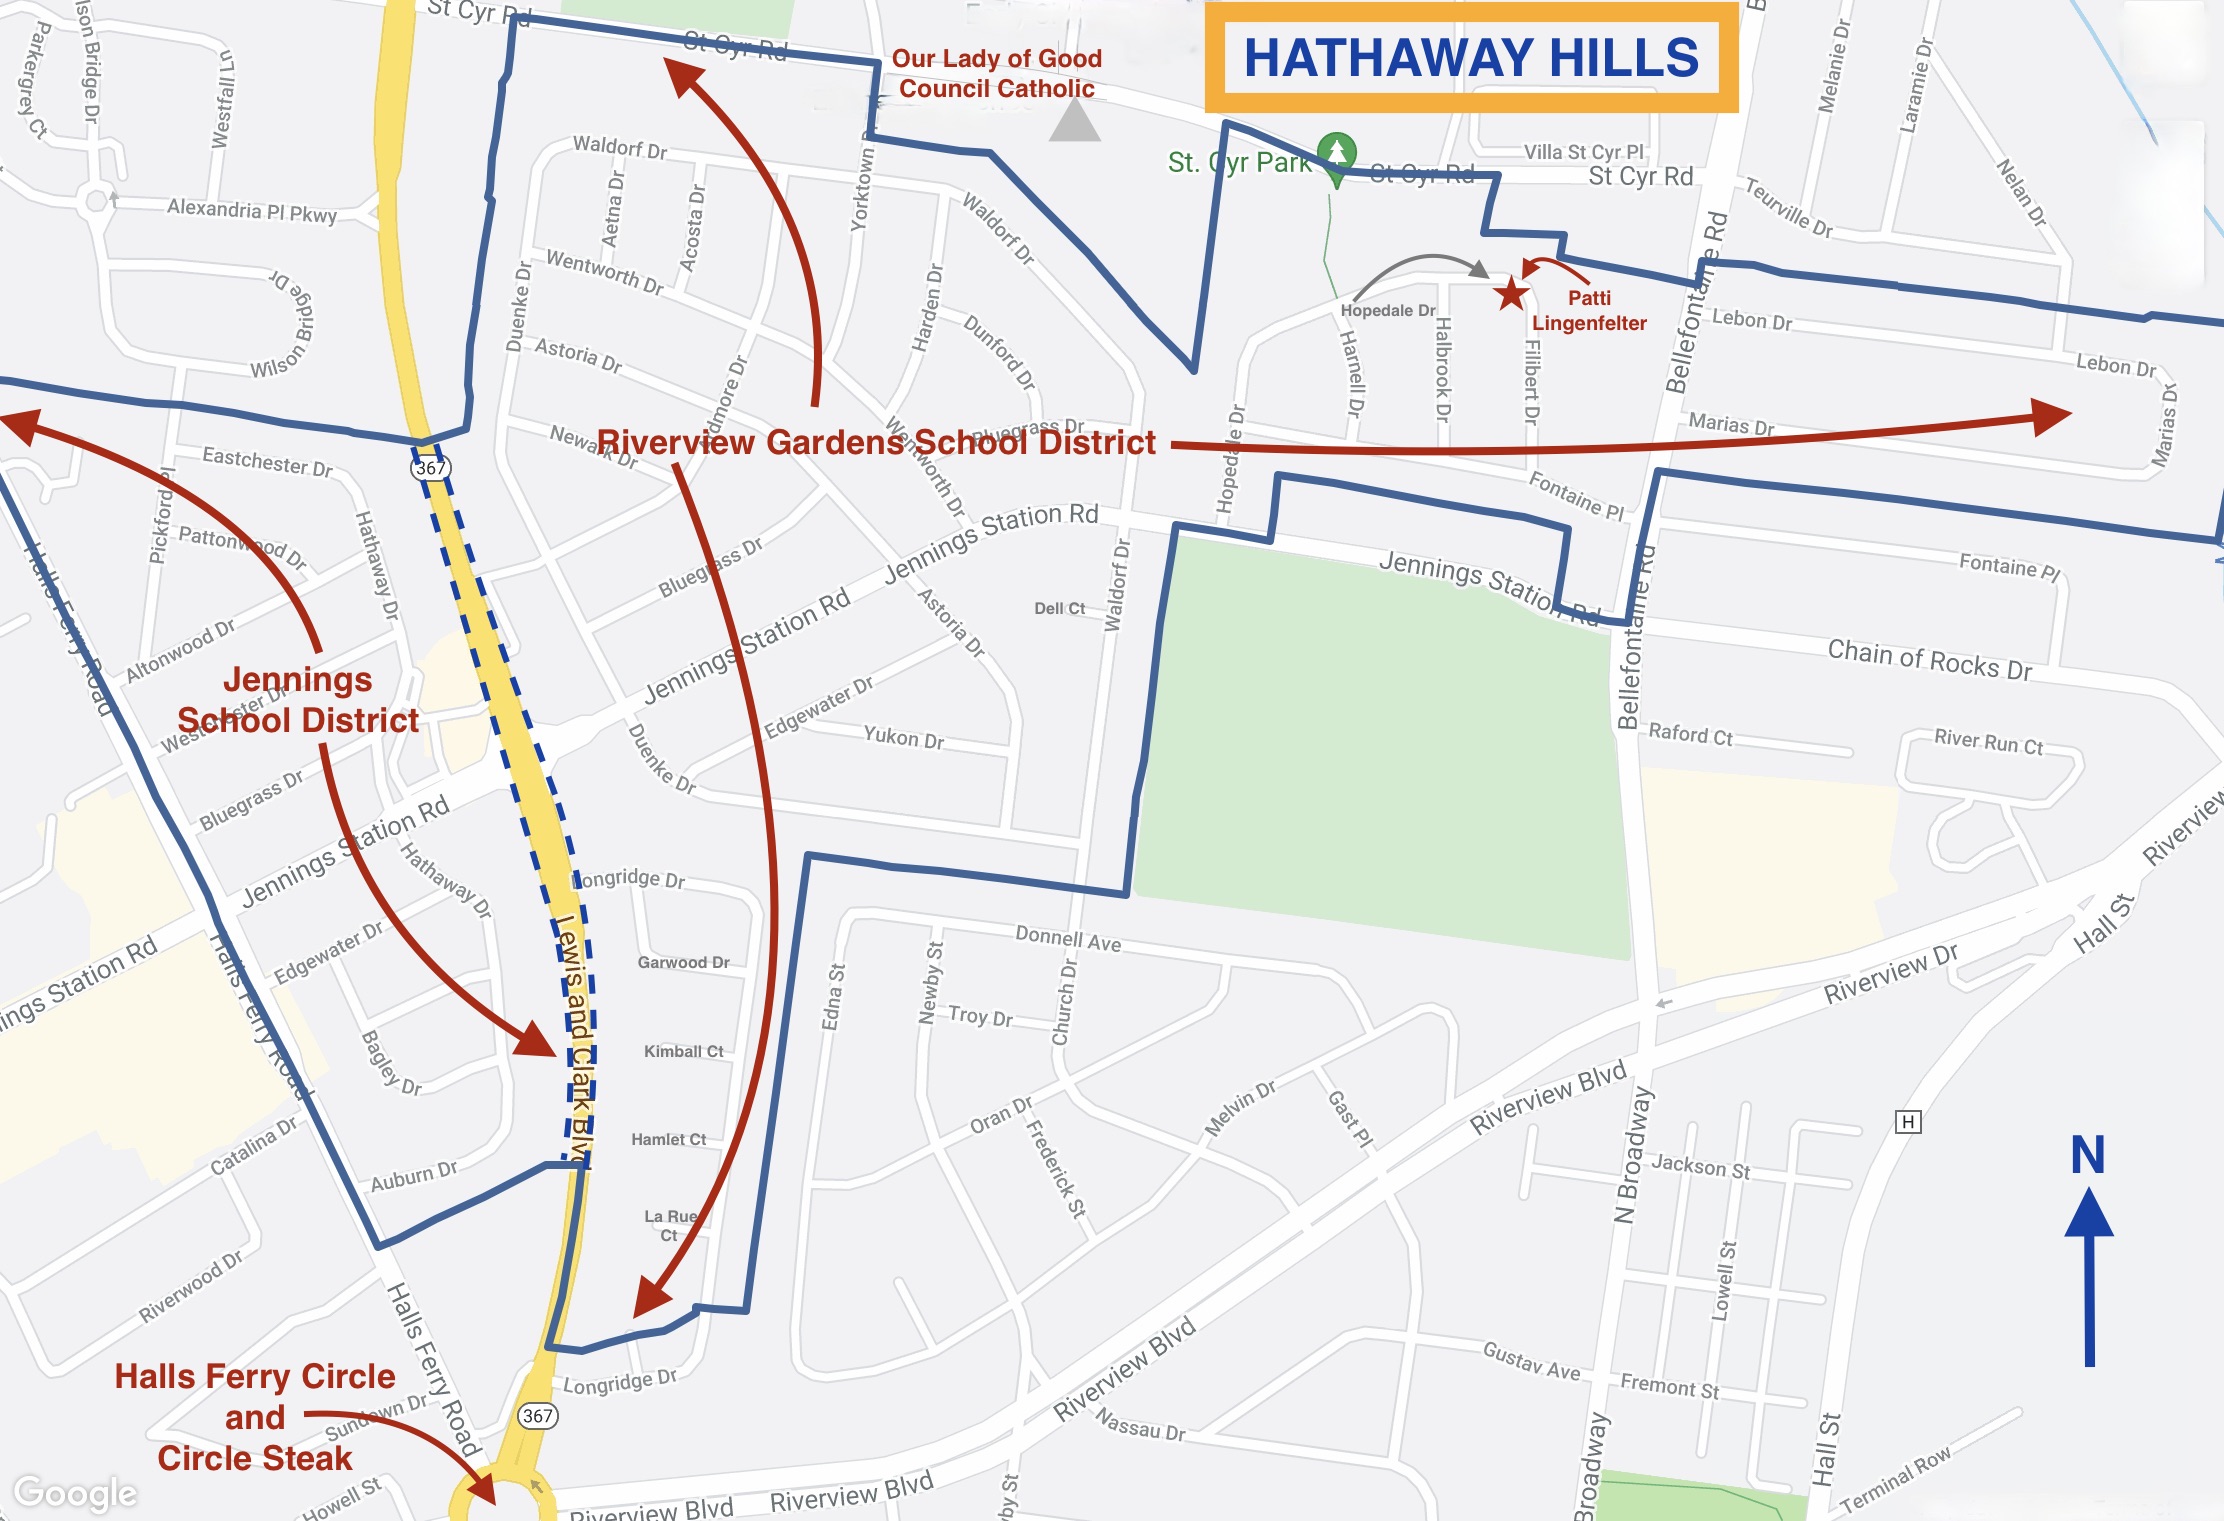 HATHAWAY HILLS SUBDIVISION MAP 